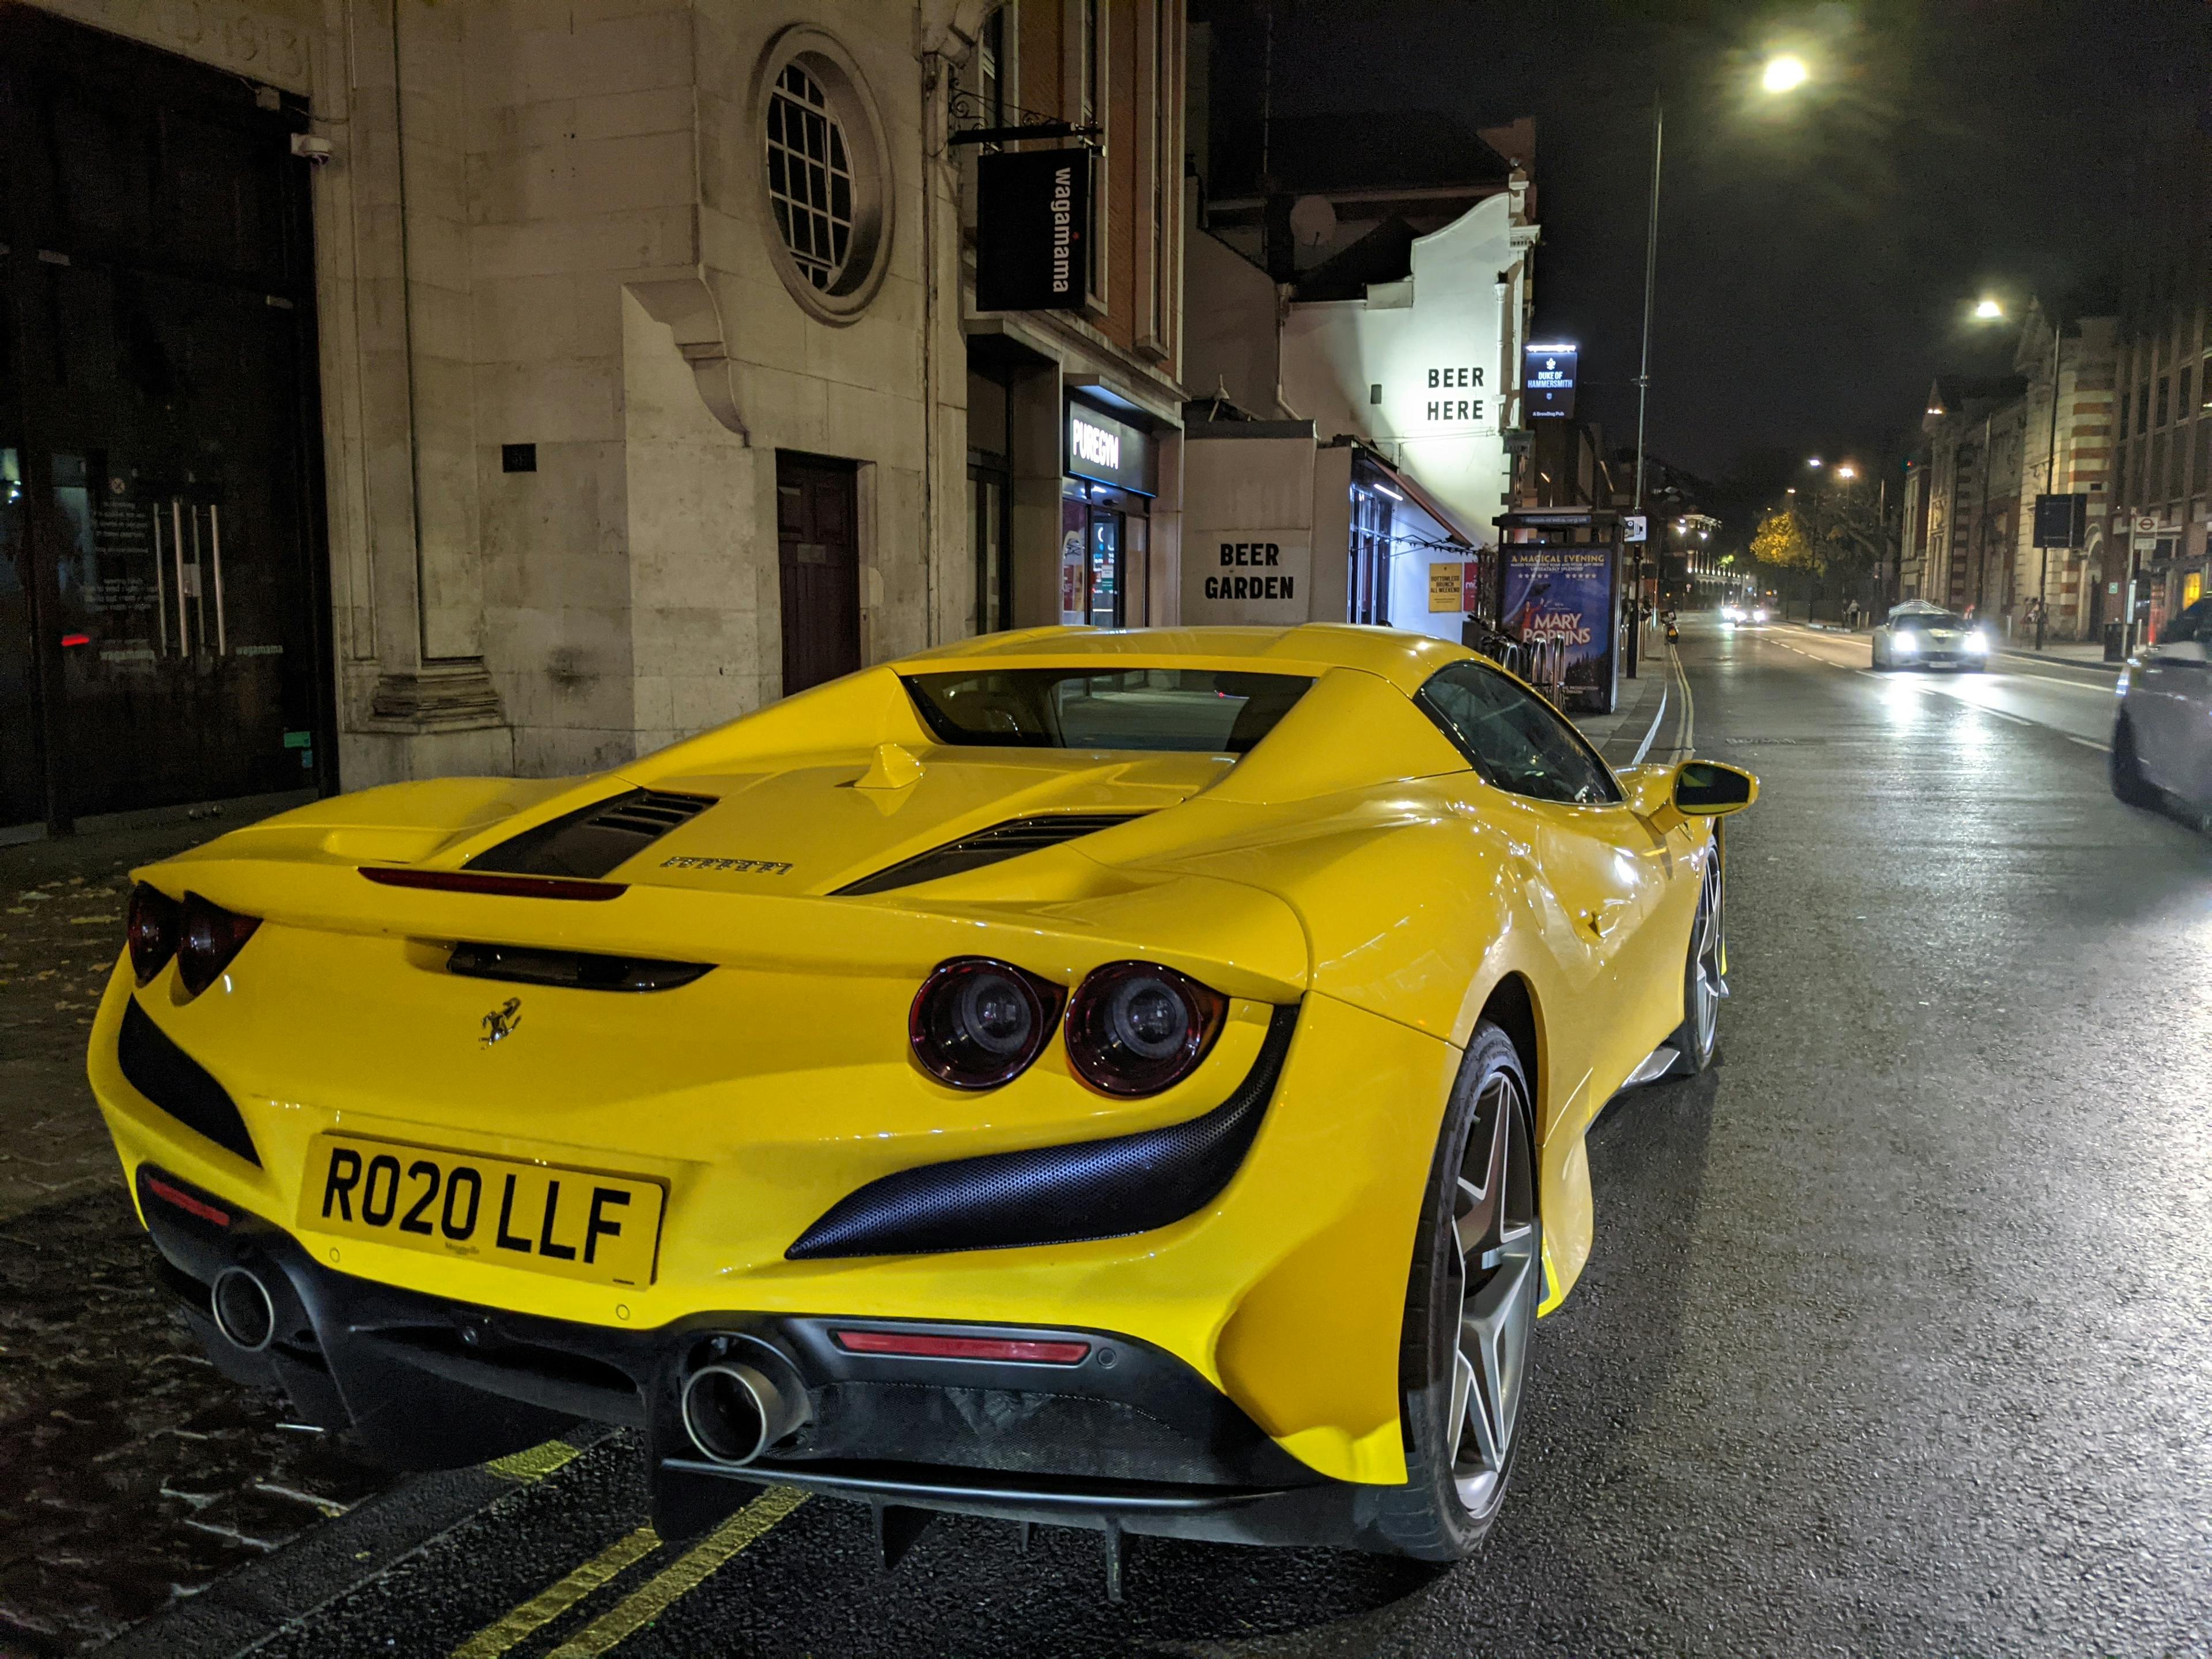 Kishore Naib's Ferrari F8 Spider parked outside Pure Gym Hammersmith Palais